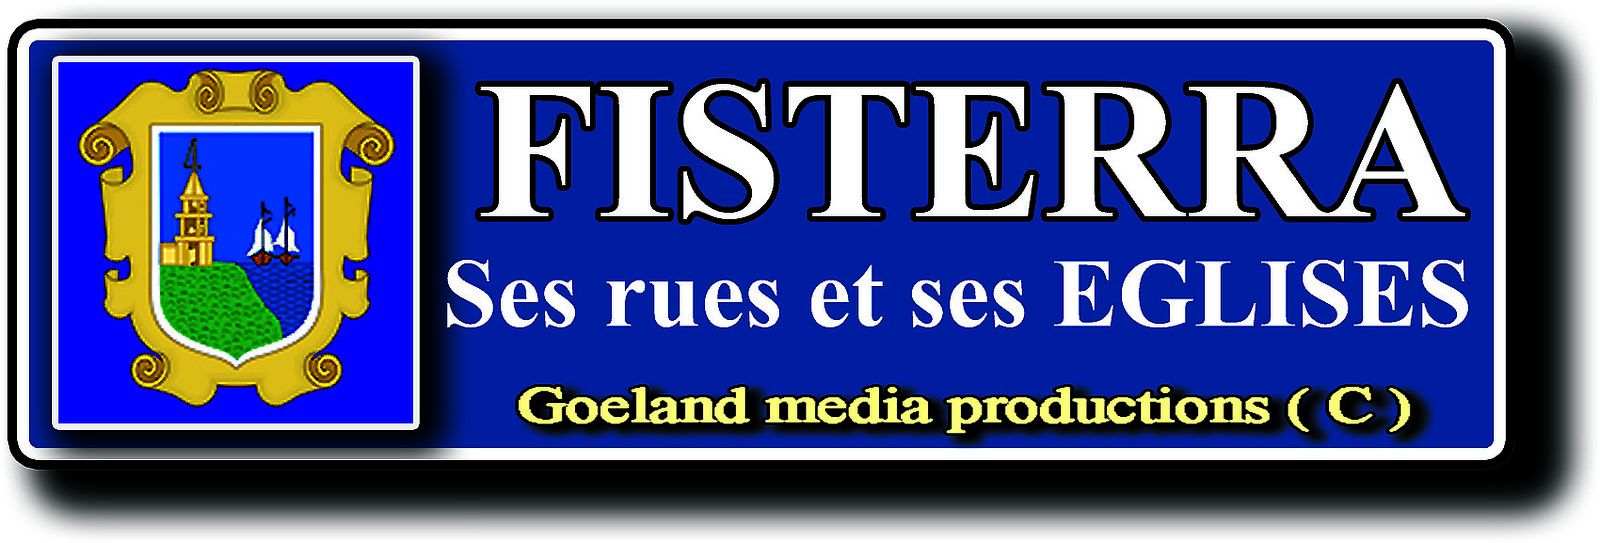 Fistera GALICE - Espana - goelandmedia.prod@gmail.com (C) - chemin de compostelle